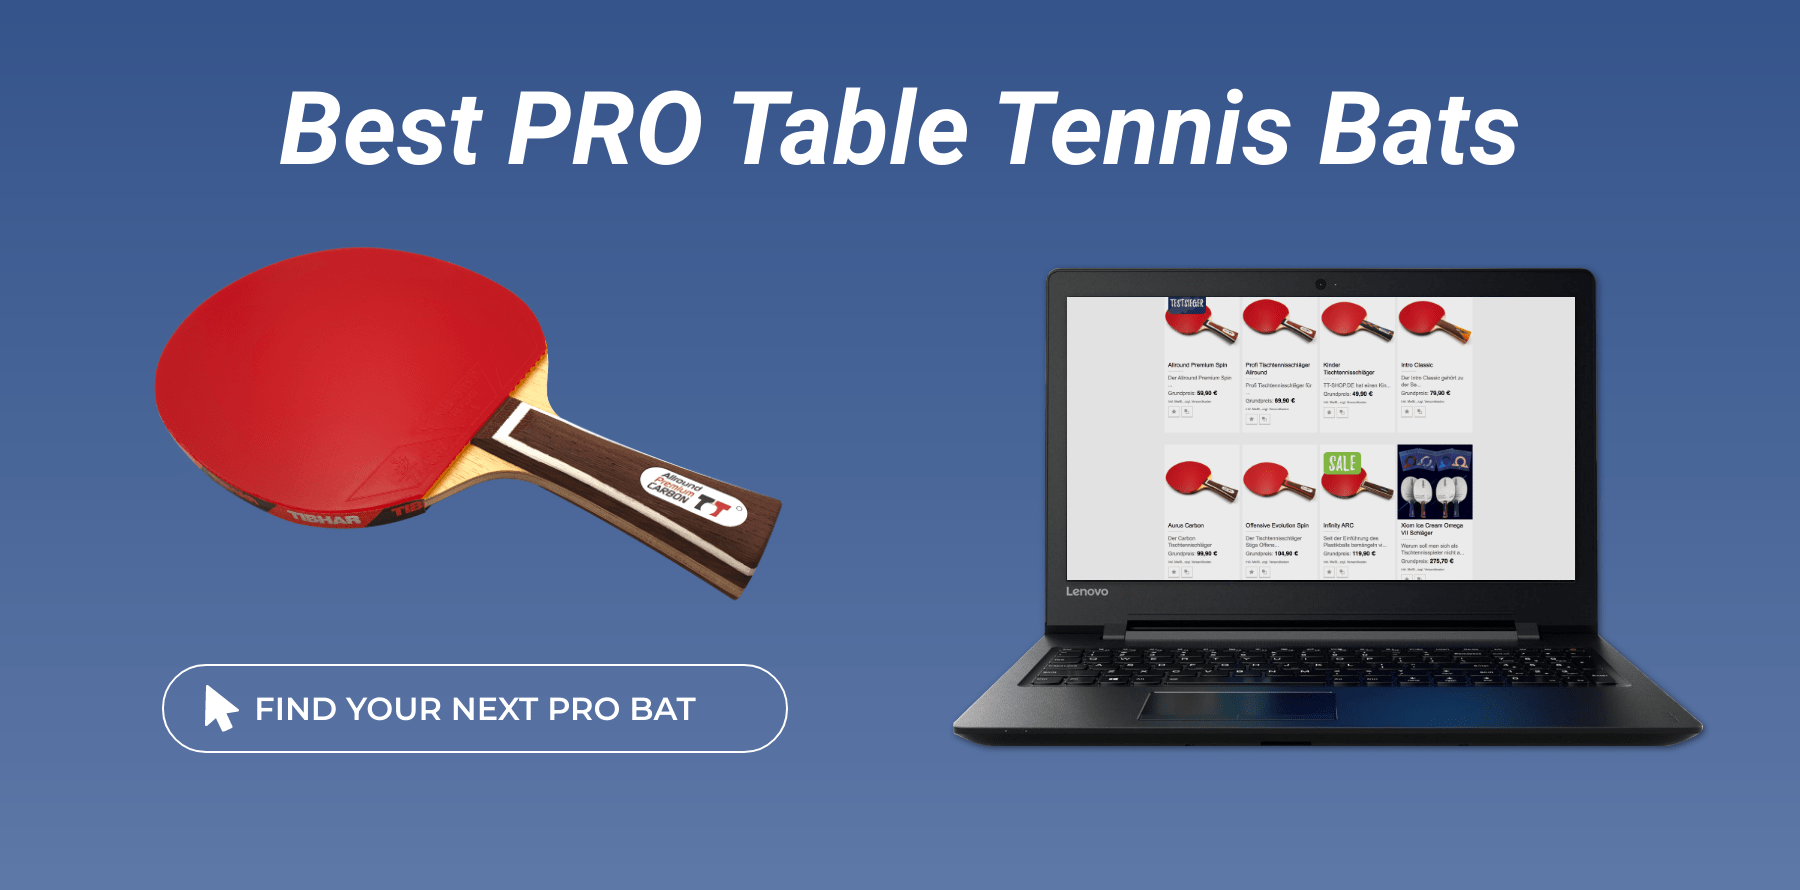 Robo-Pong 3050XL Table Tennis Robot - Replayed Price